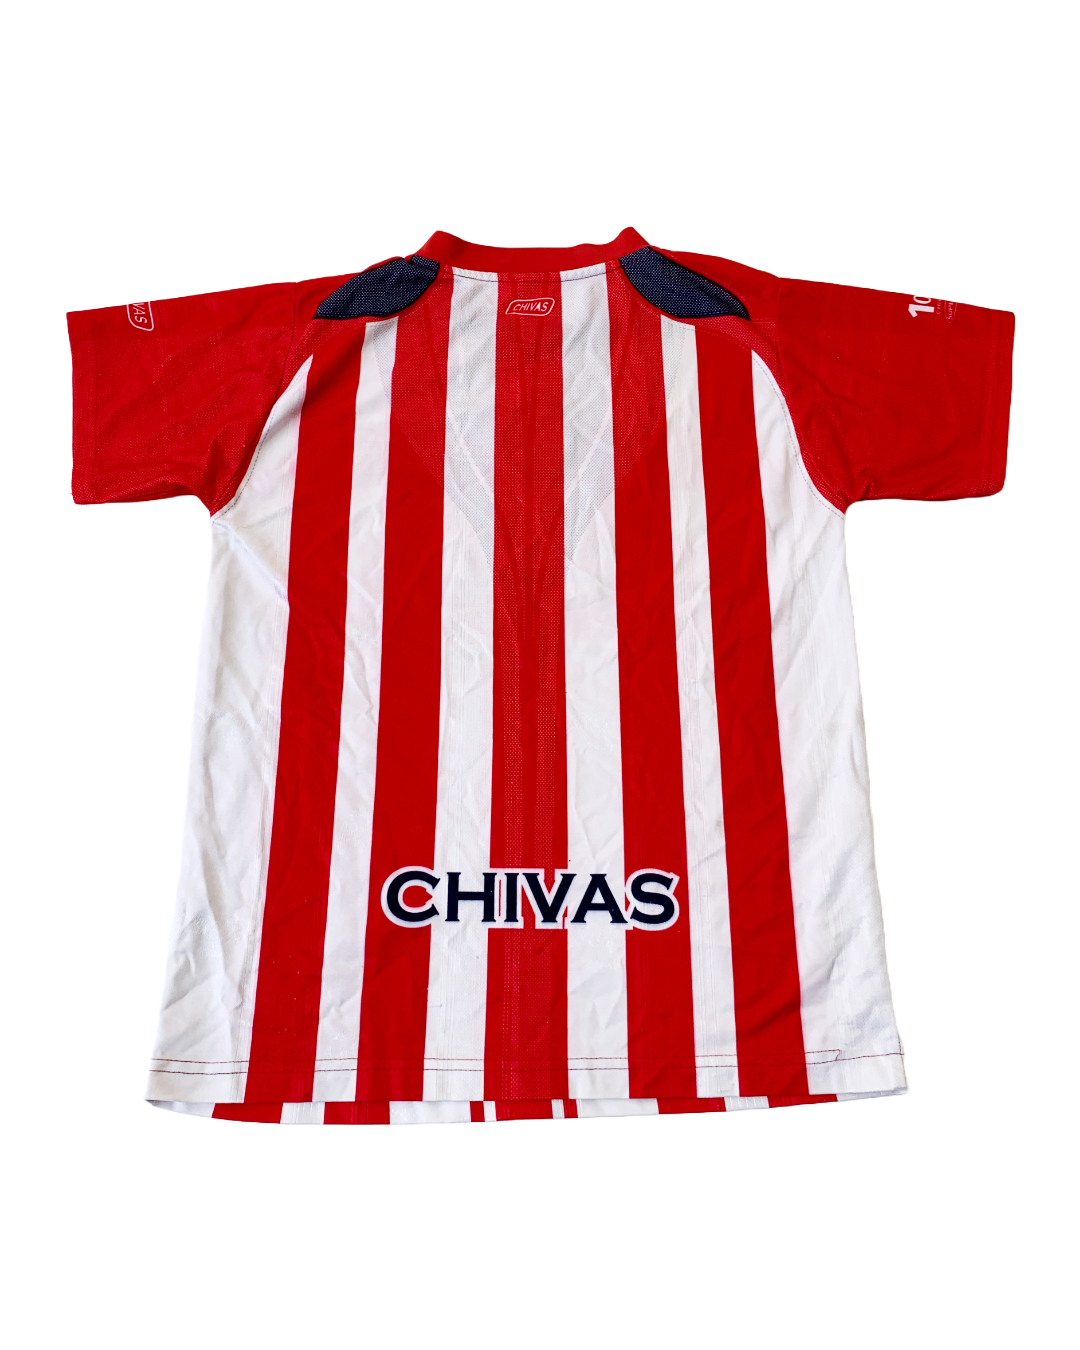 Chivas Jersey - XS